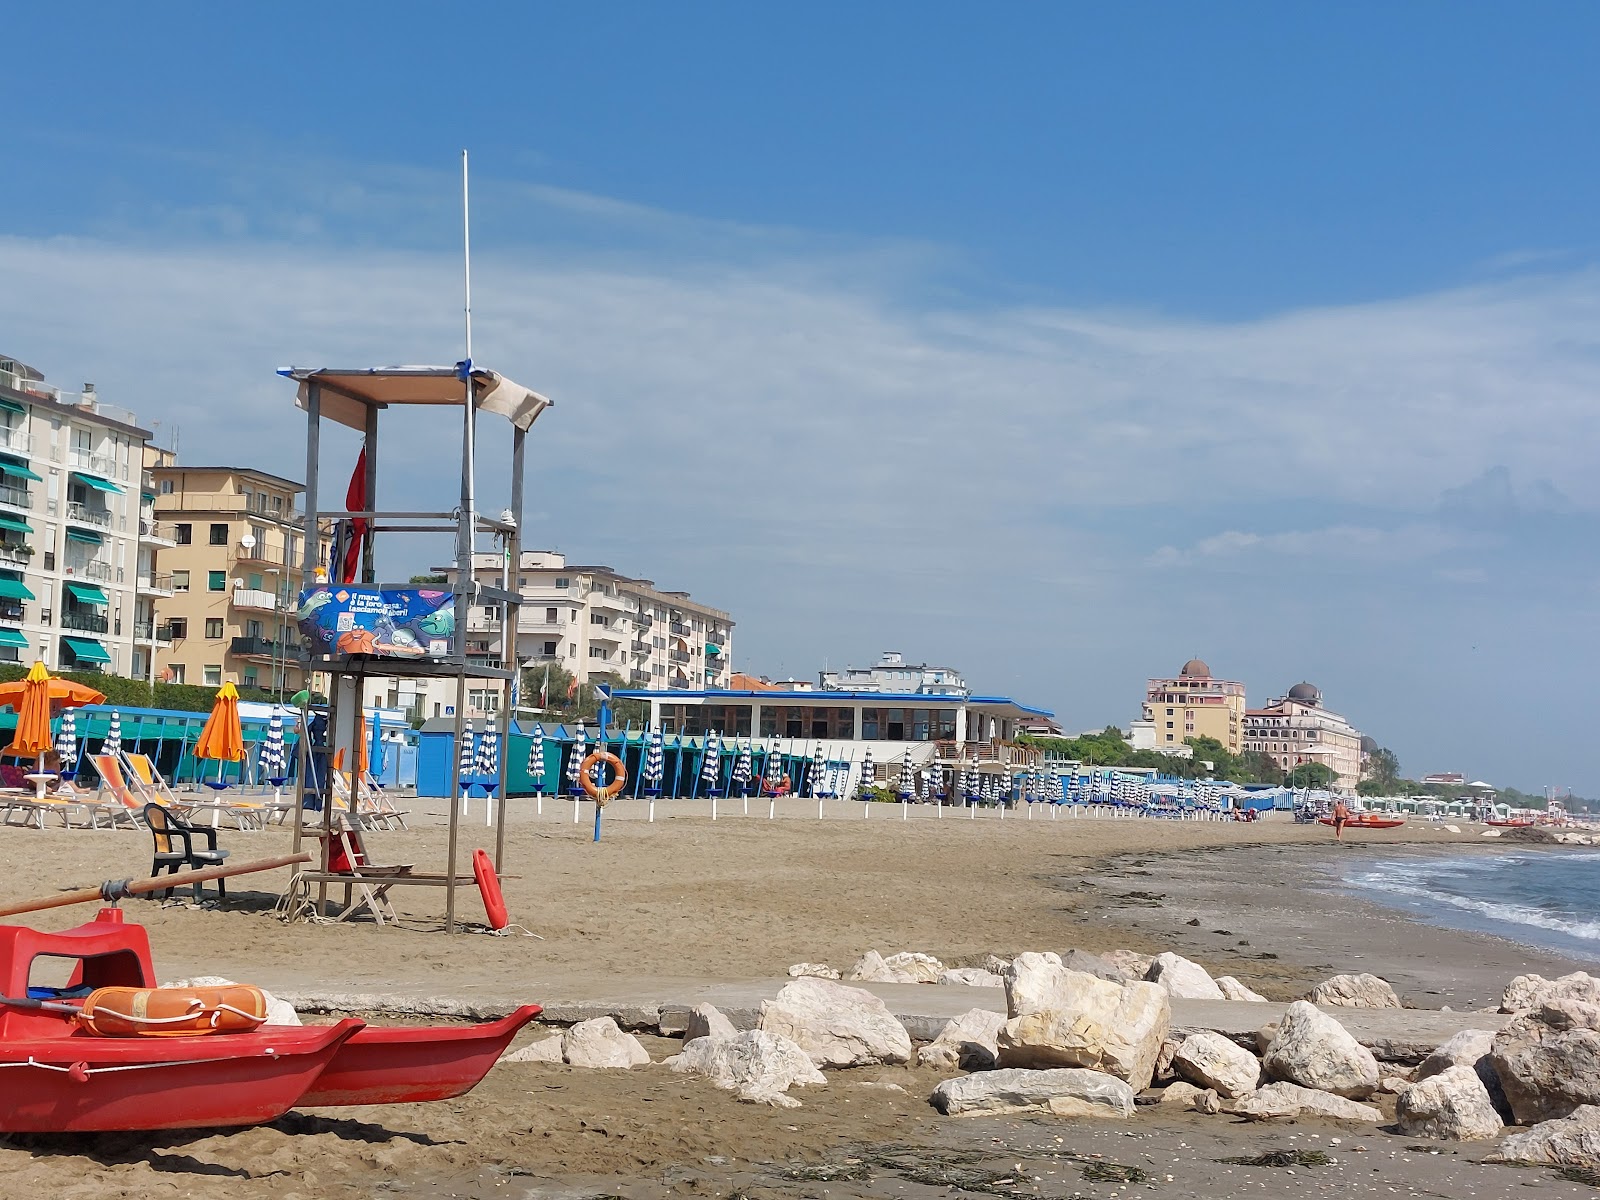 Foto de Murazzi Spiaggia Libera área de comodidades